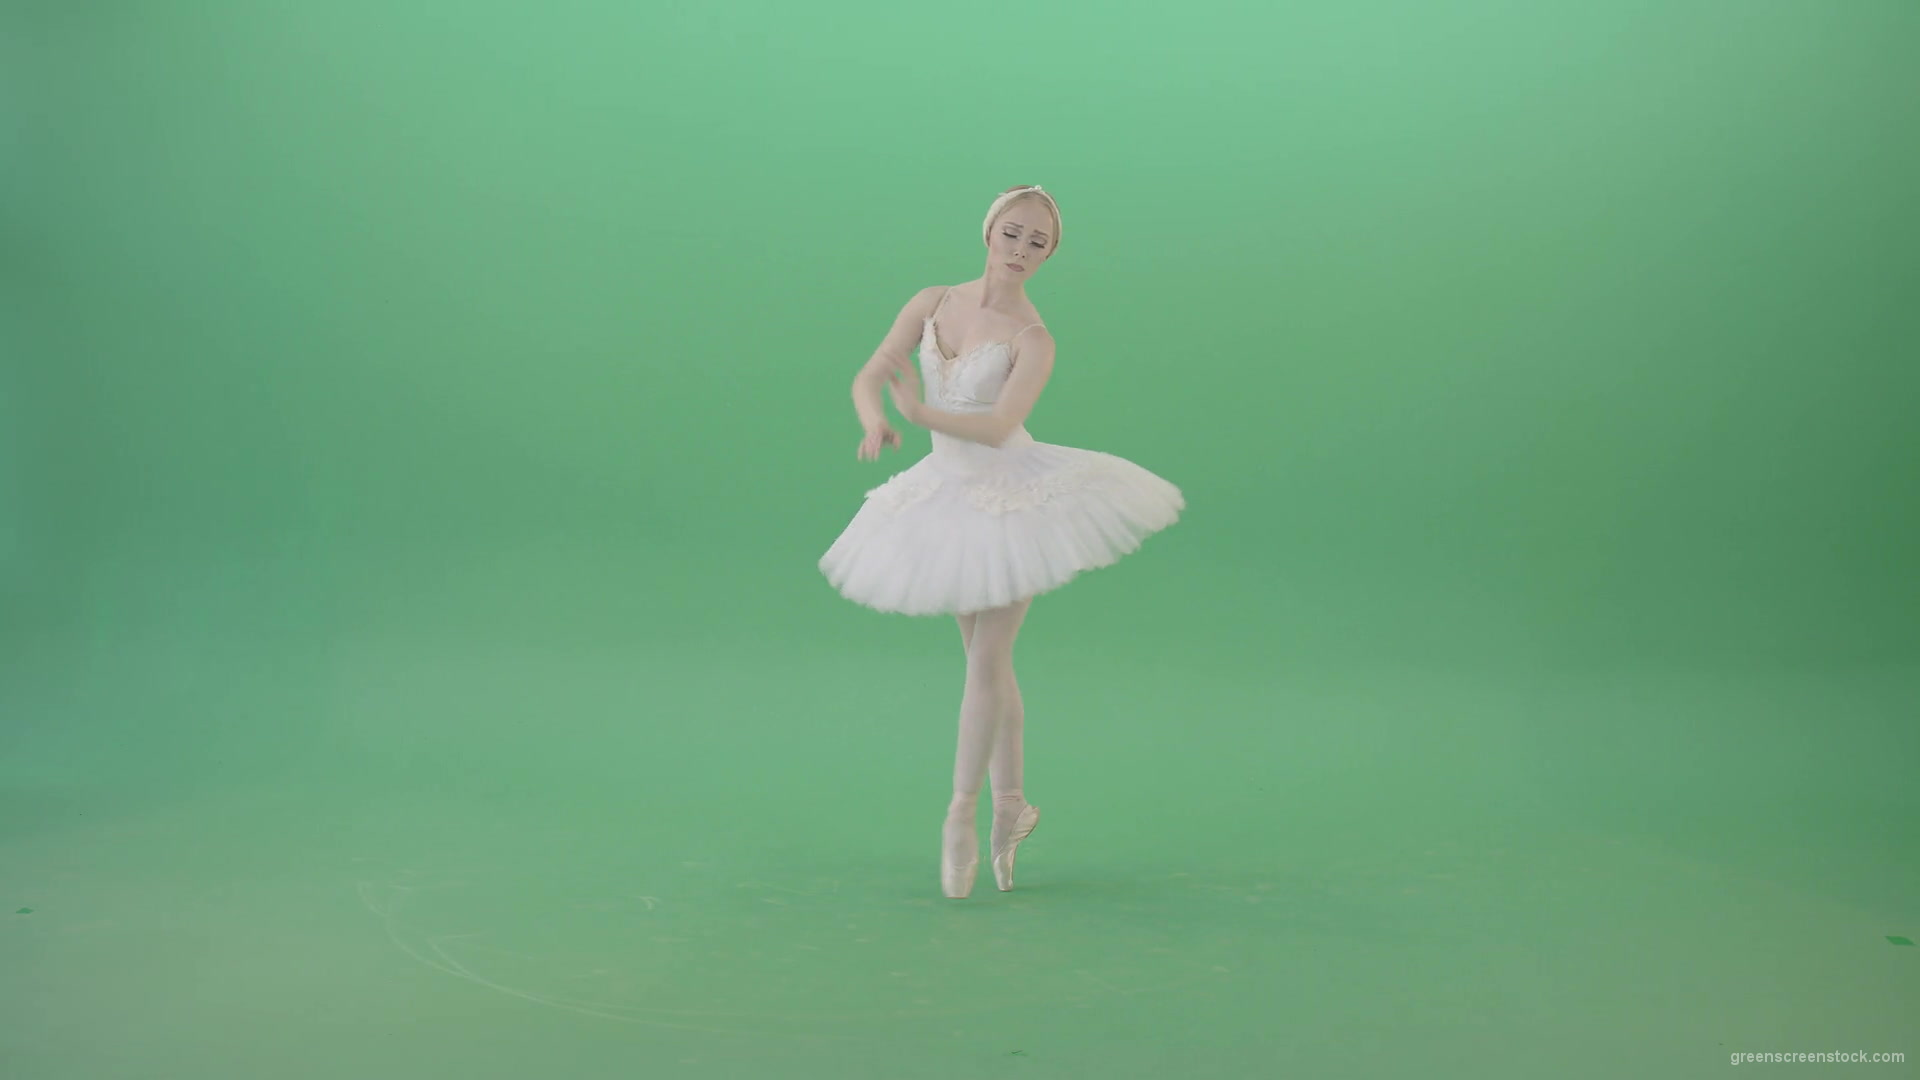 Luxury-Vienna-Opera-Ballet-Girl-has-a-PSY-Flight-on-Green-Screen-4K-Video-Footage-1920_005 Green Screen Stock